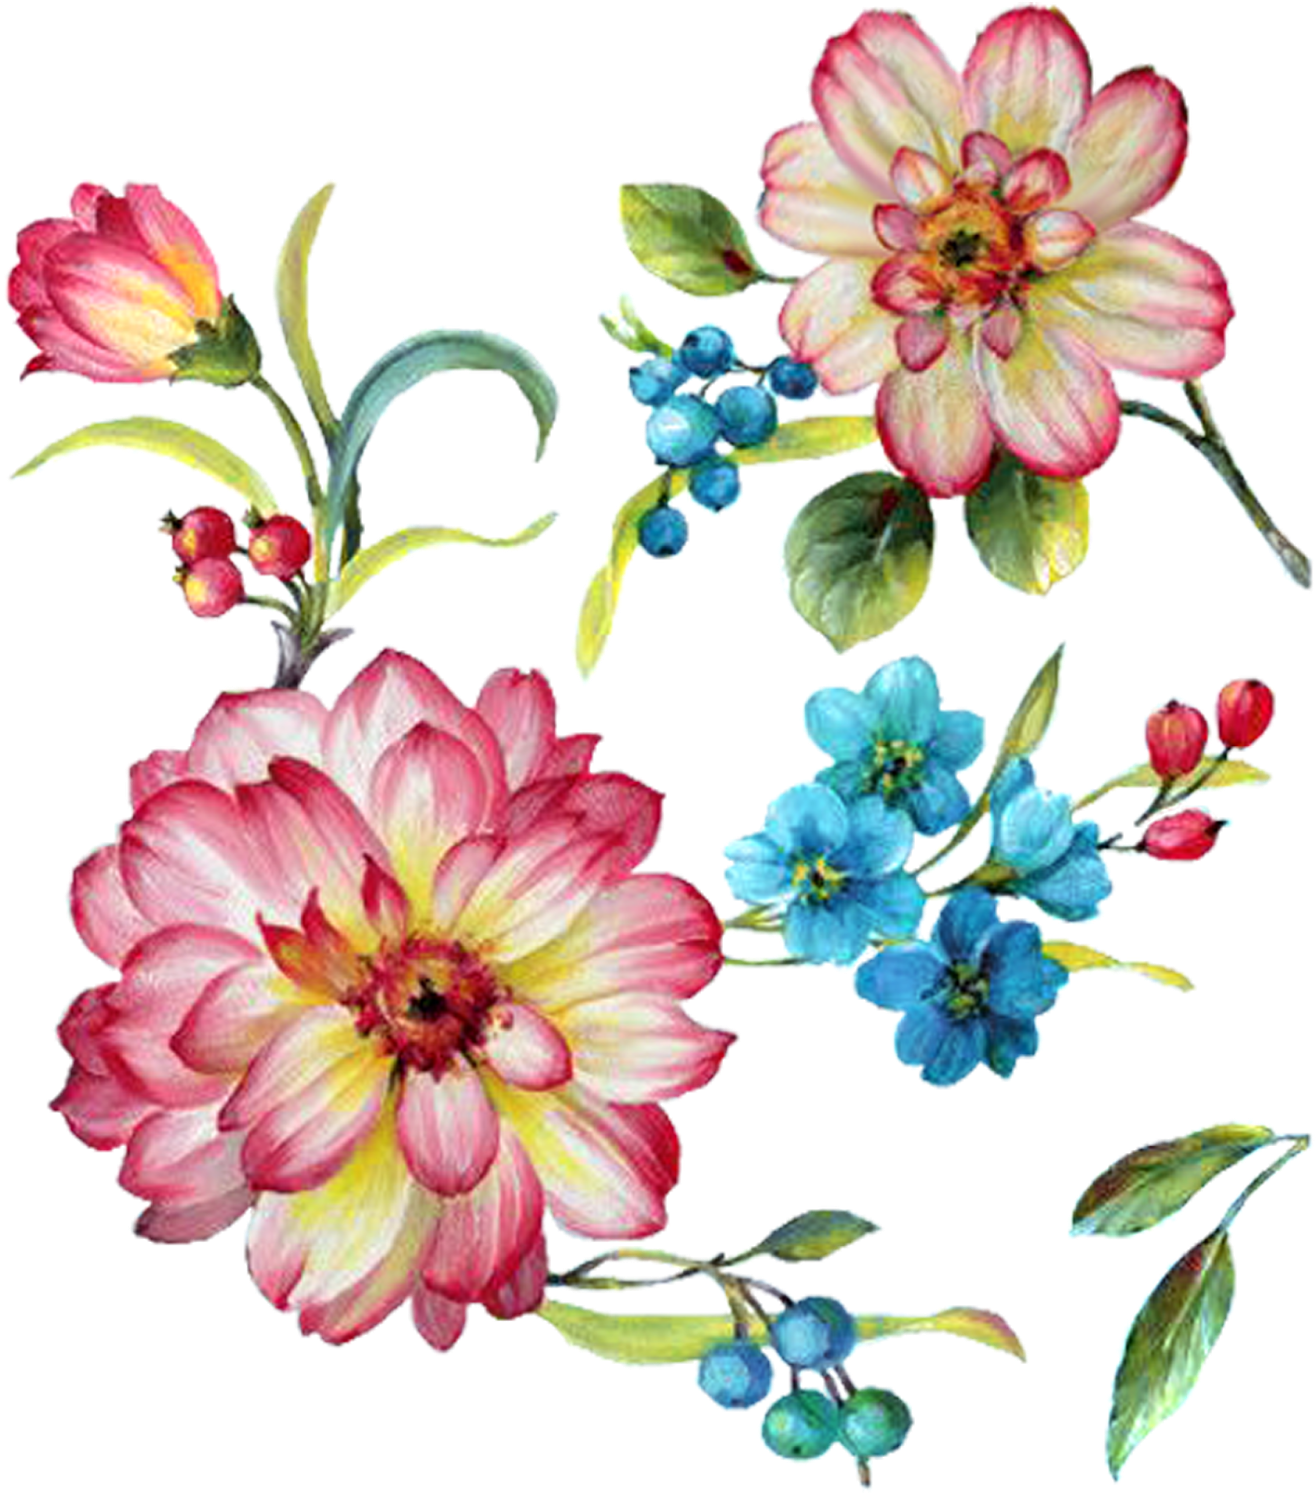 Yüksek Çözünürlüklü Dekupaj Resimleri,sanatsal Dekupaj - Flowers Painting Patterns (1600x1600)